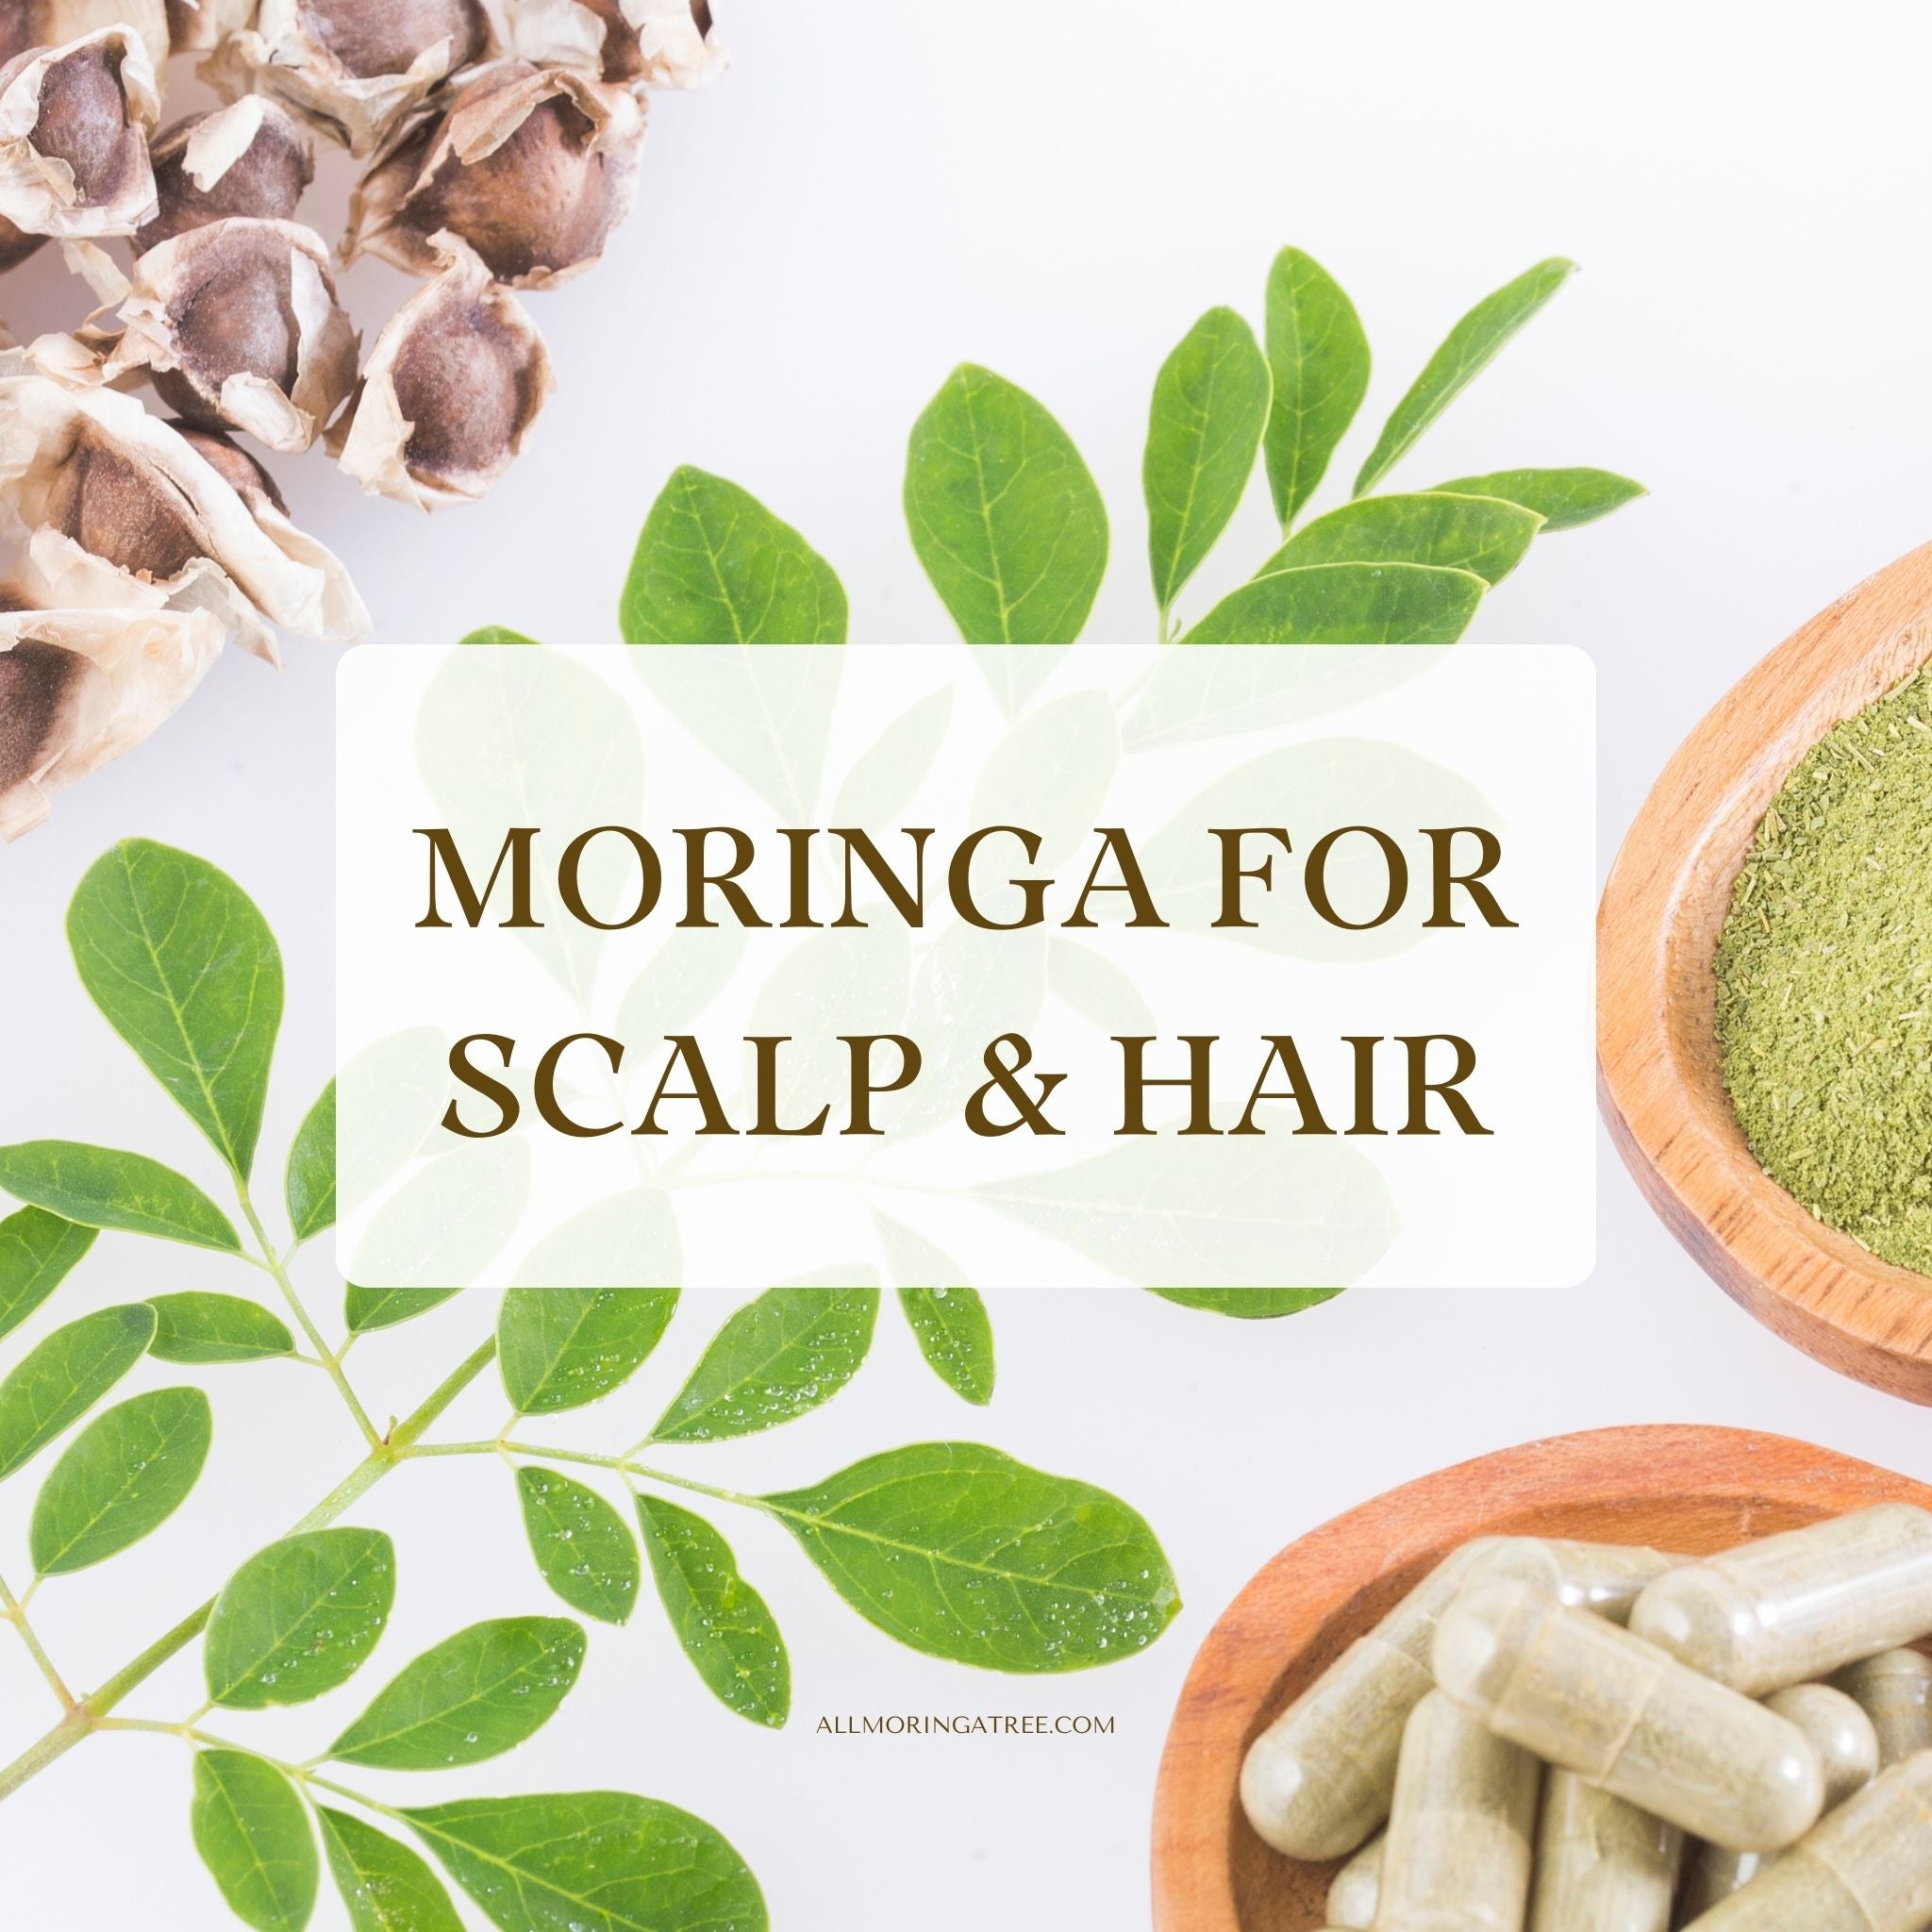 moringa benefits of leaves and seeds